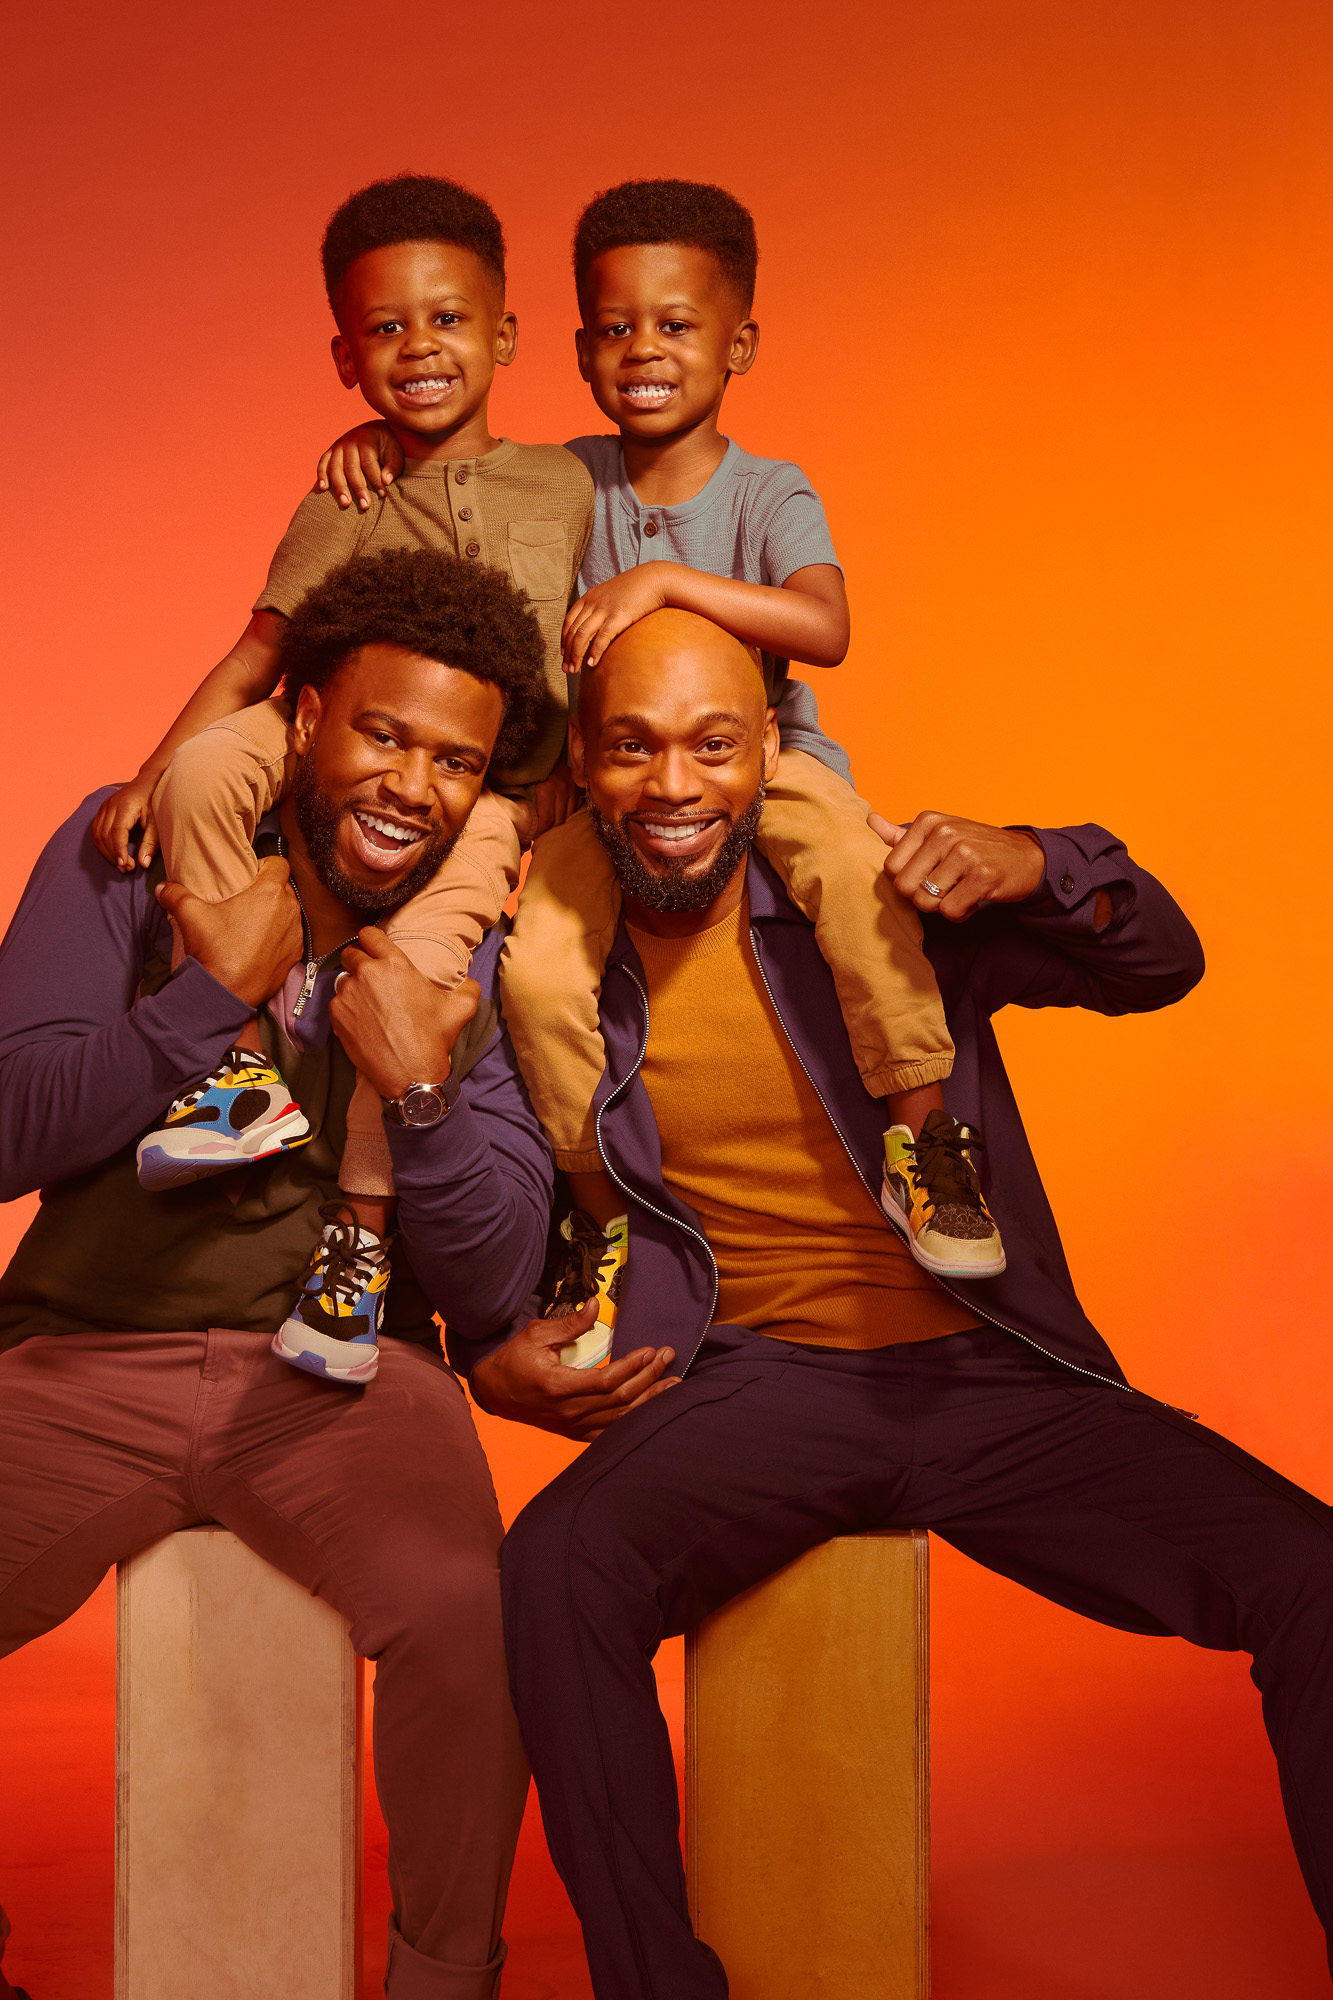 SheaMoisture Celebrates Black Dads Through the Sounds of Fatherhood